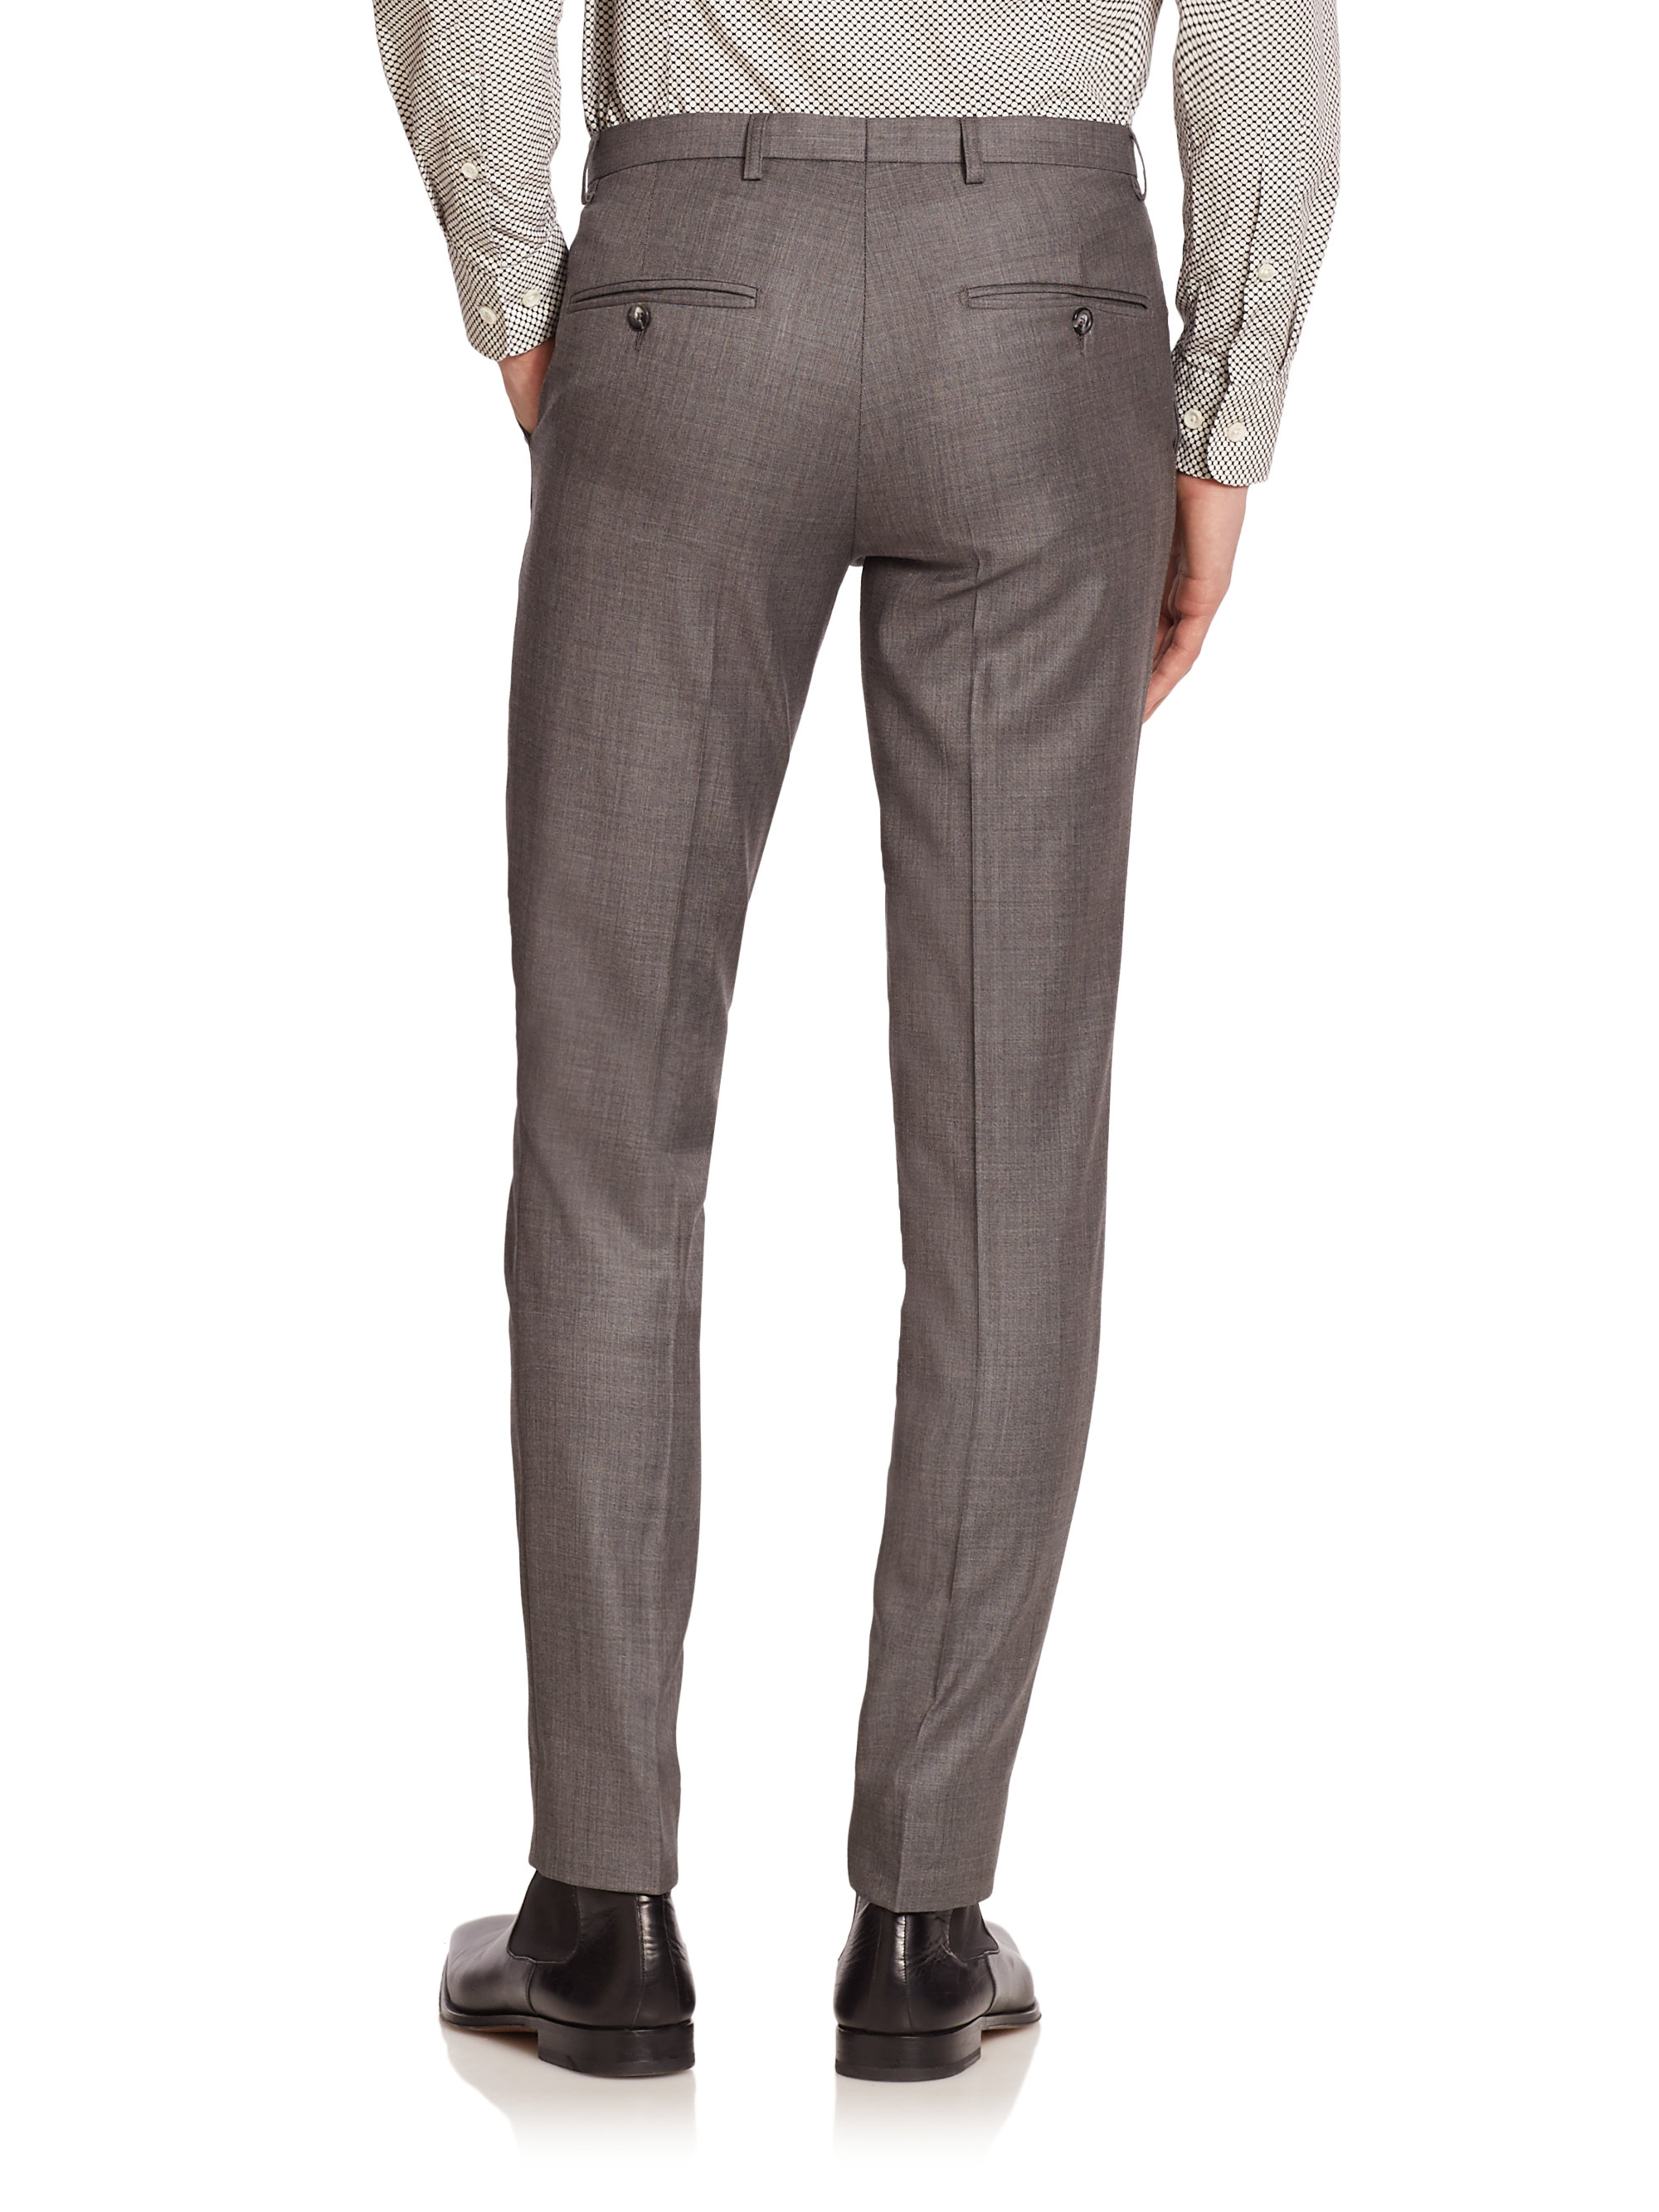 J.Lindeberg Flat-front Virgin Wool Pants in Gray for Men - Lyst